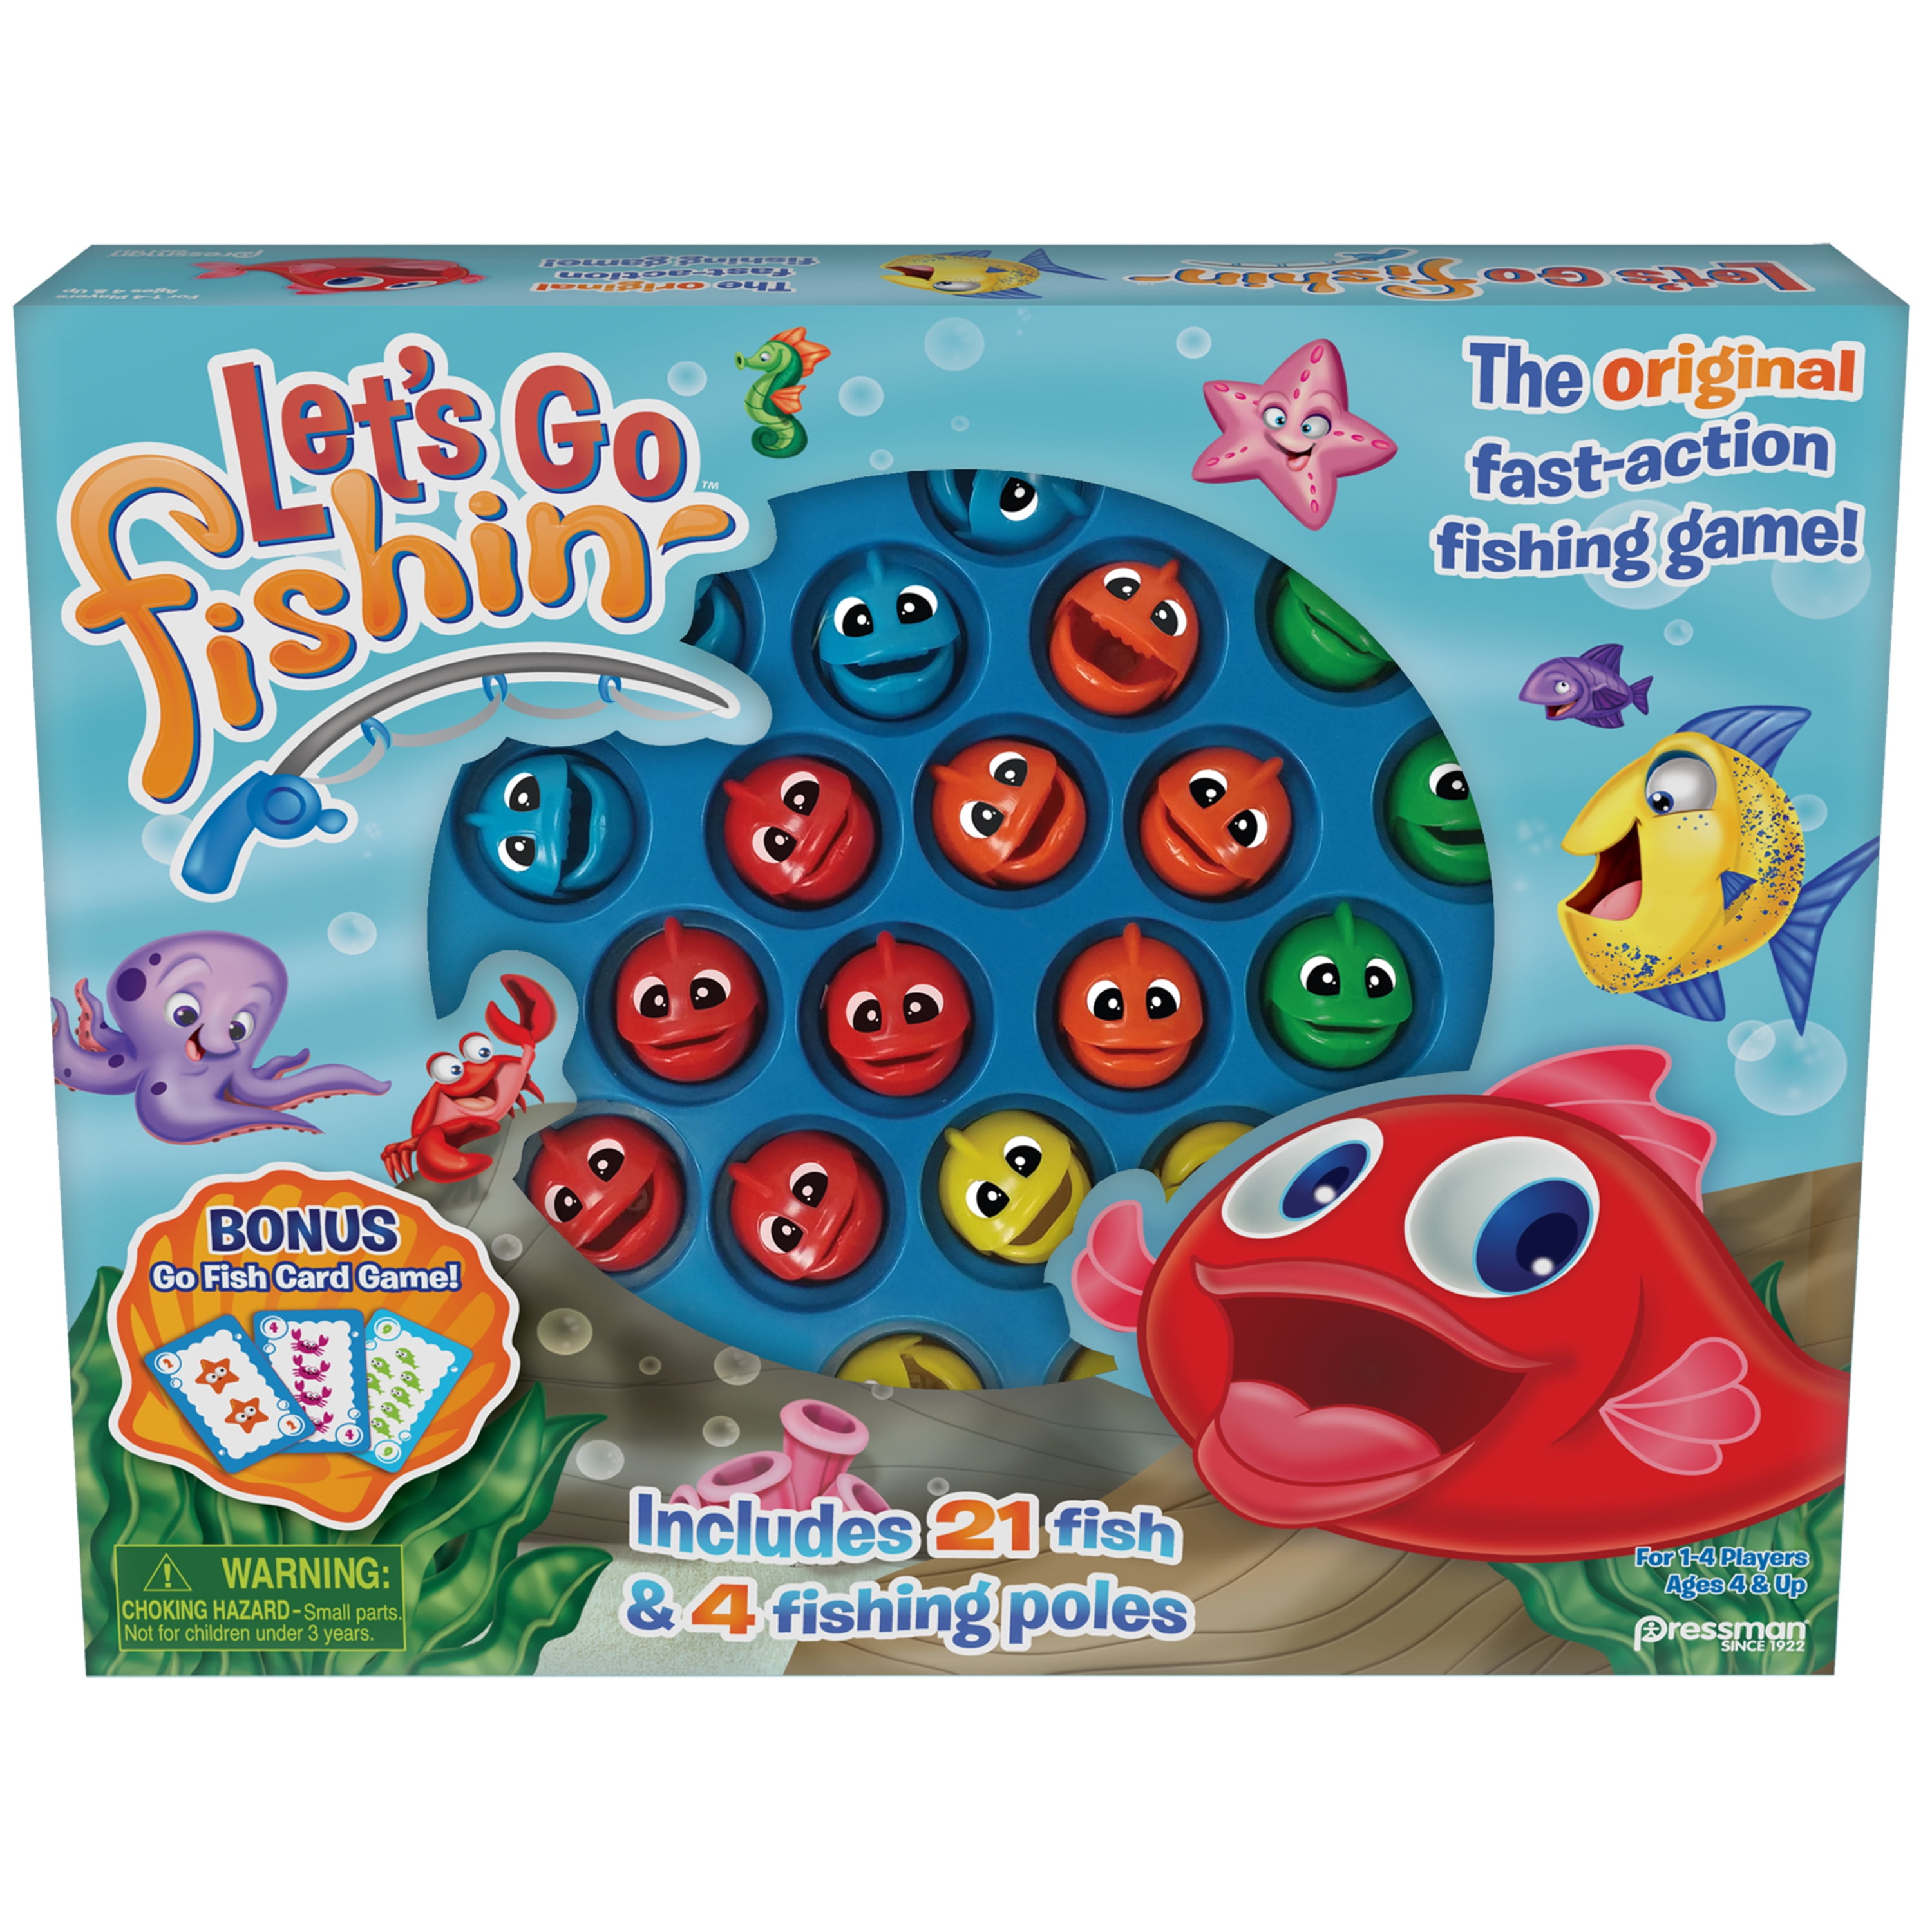 Go Fish You Wish! - Card Game Twist on Classic Go Fish